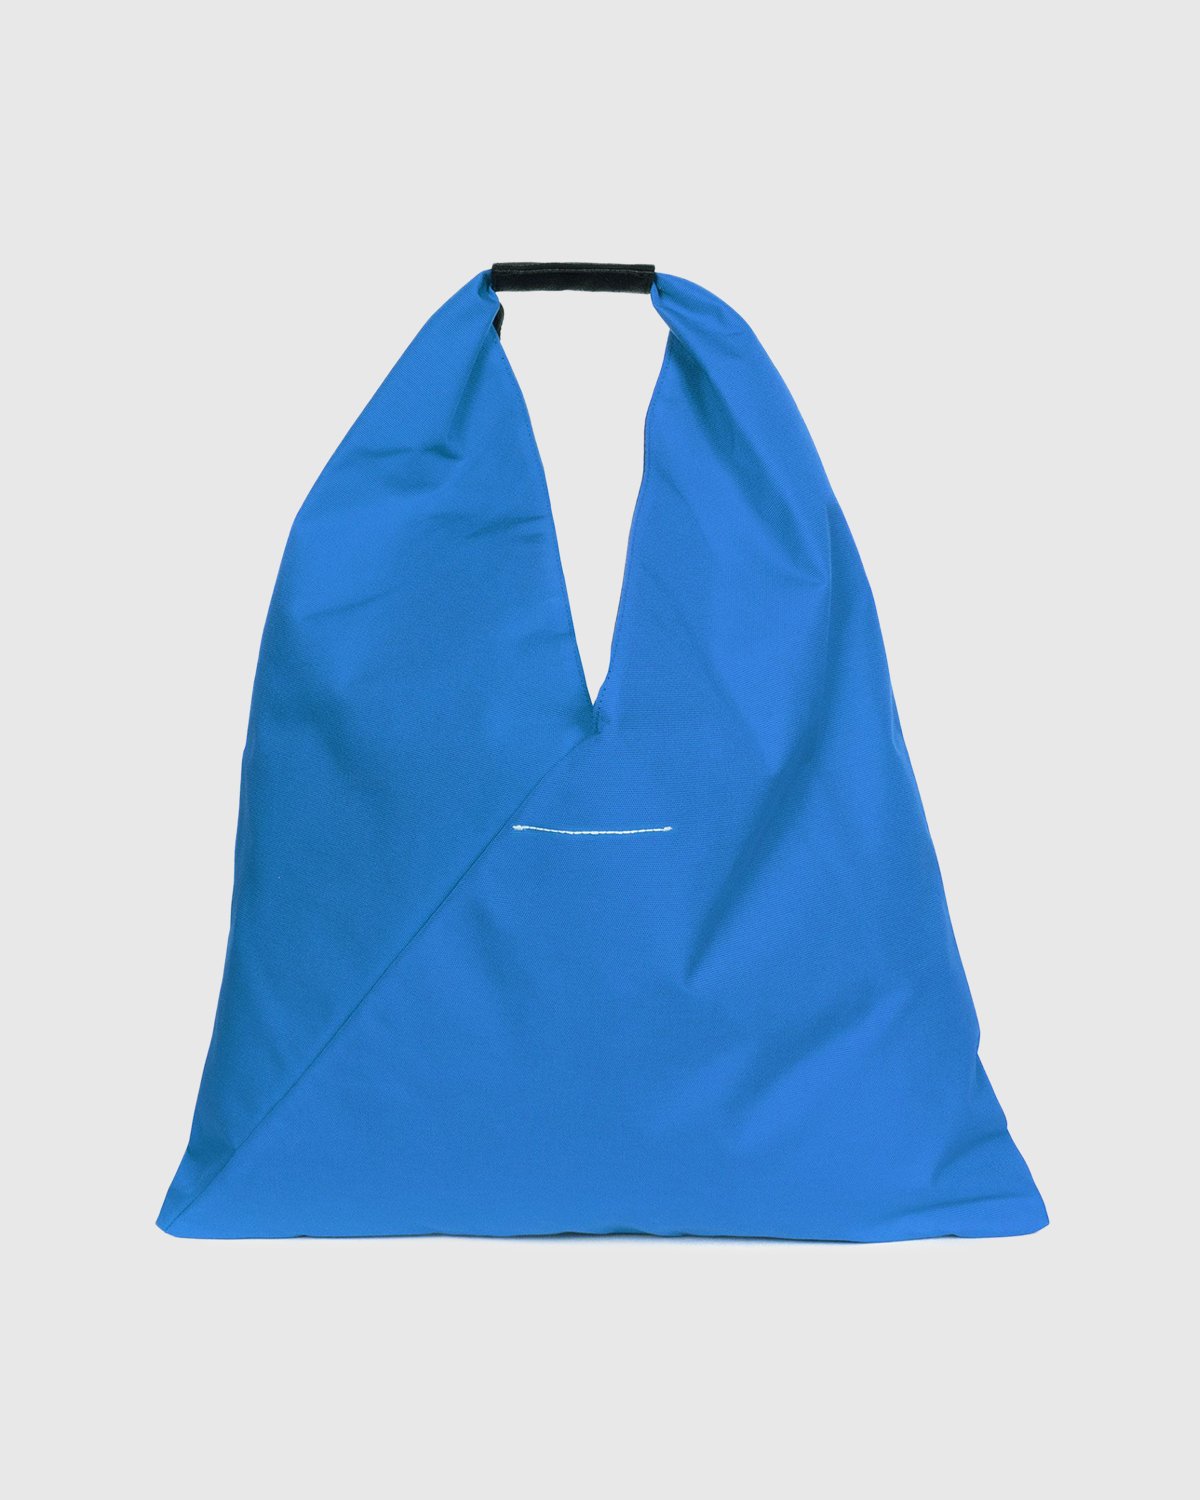 MM6 Maison Margiela x Eastpak - Shopping Bag Dazzling Blue - Accessories - Blue - Image 2